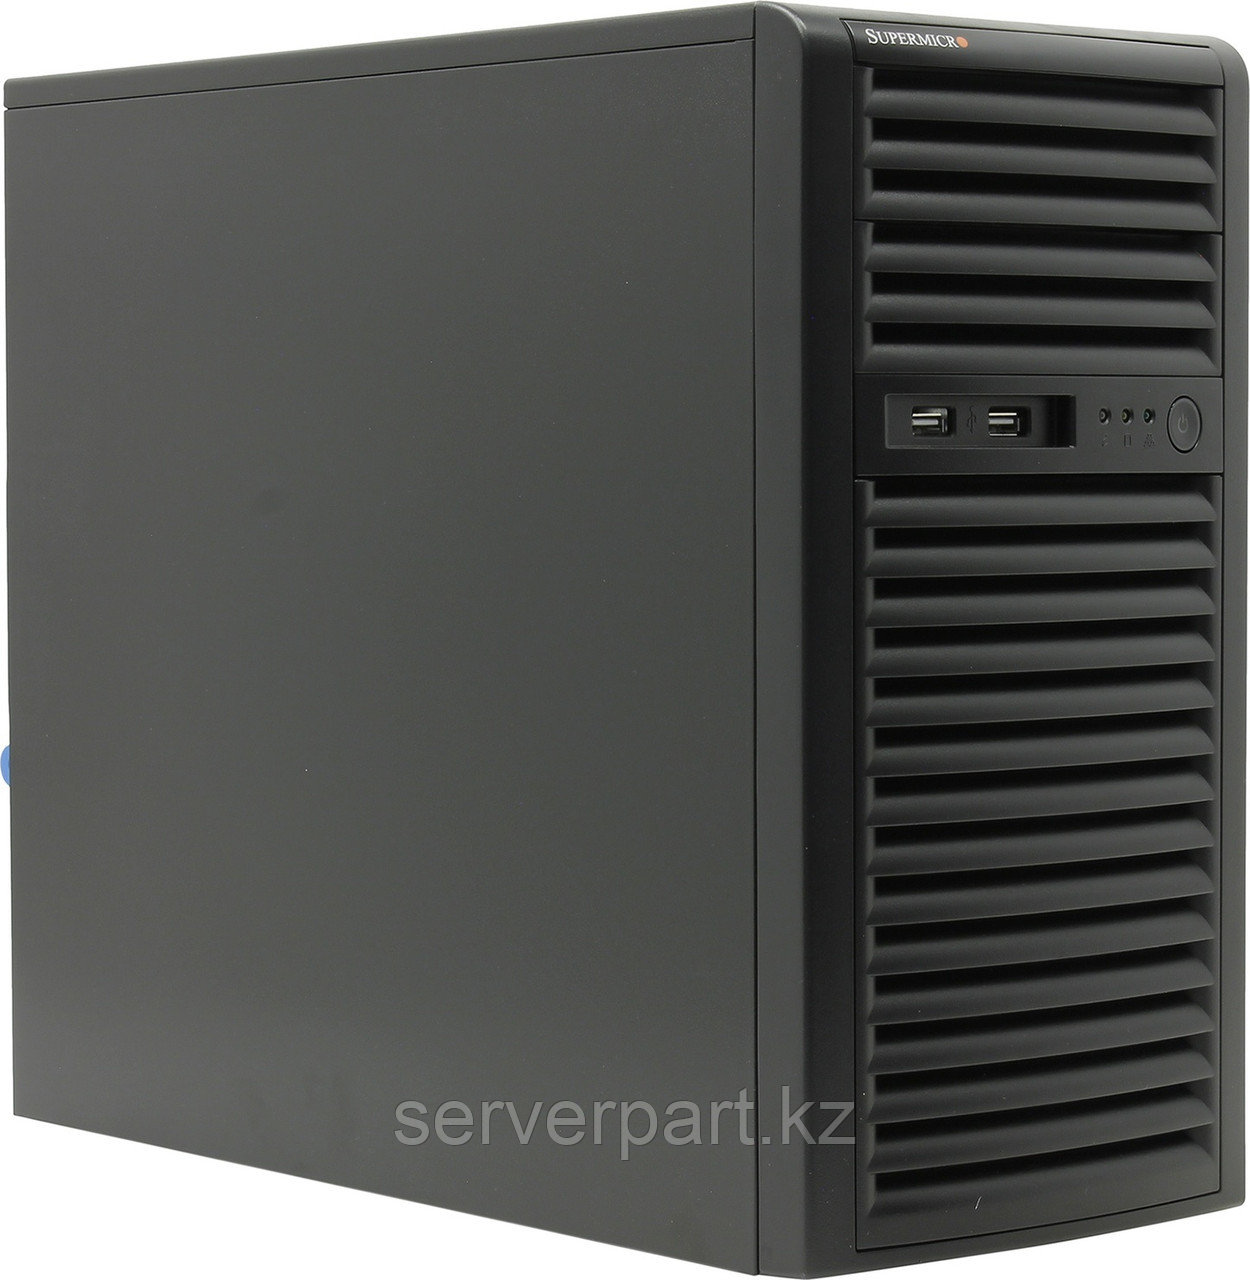 Сервер Supermicro 732-500B\X11SCL-F Tower 4LFF/4-core intel xeon E-2124 3.3GHz/no RAM/no HDD nhp/RAID